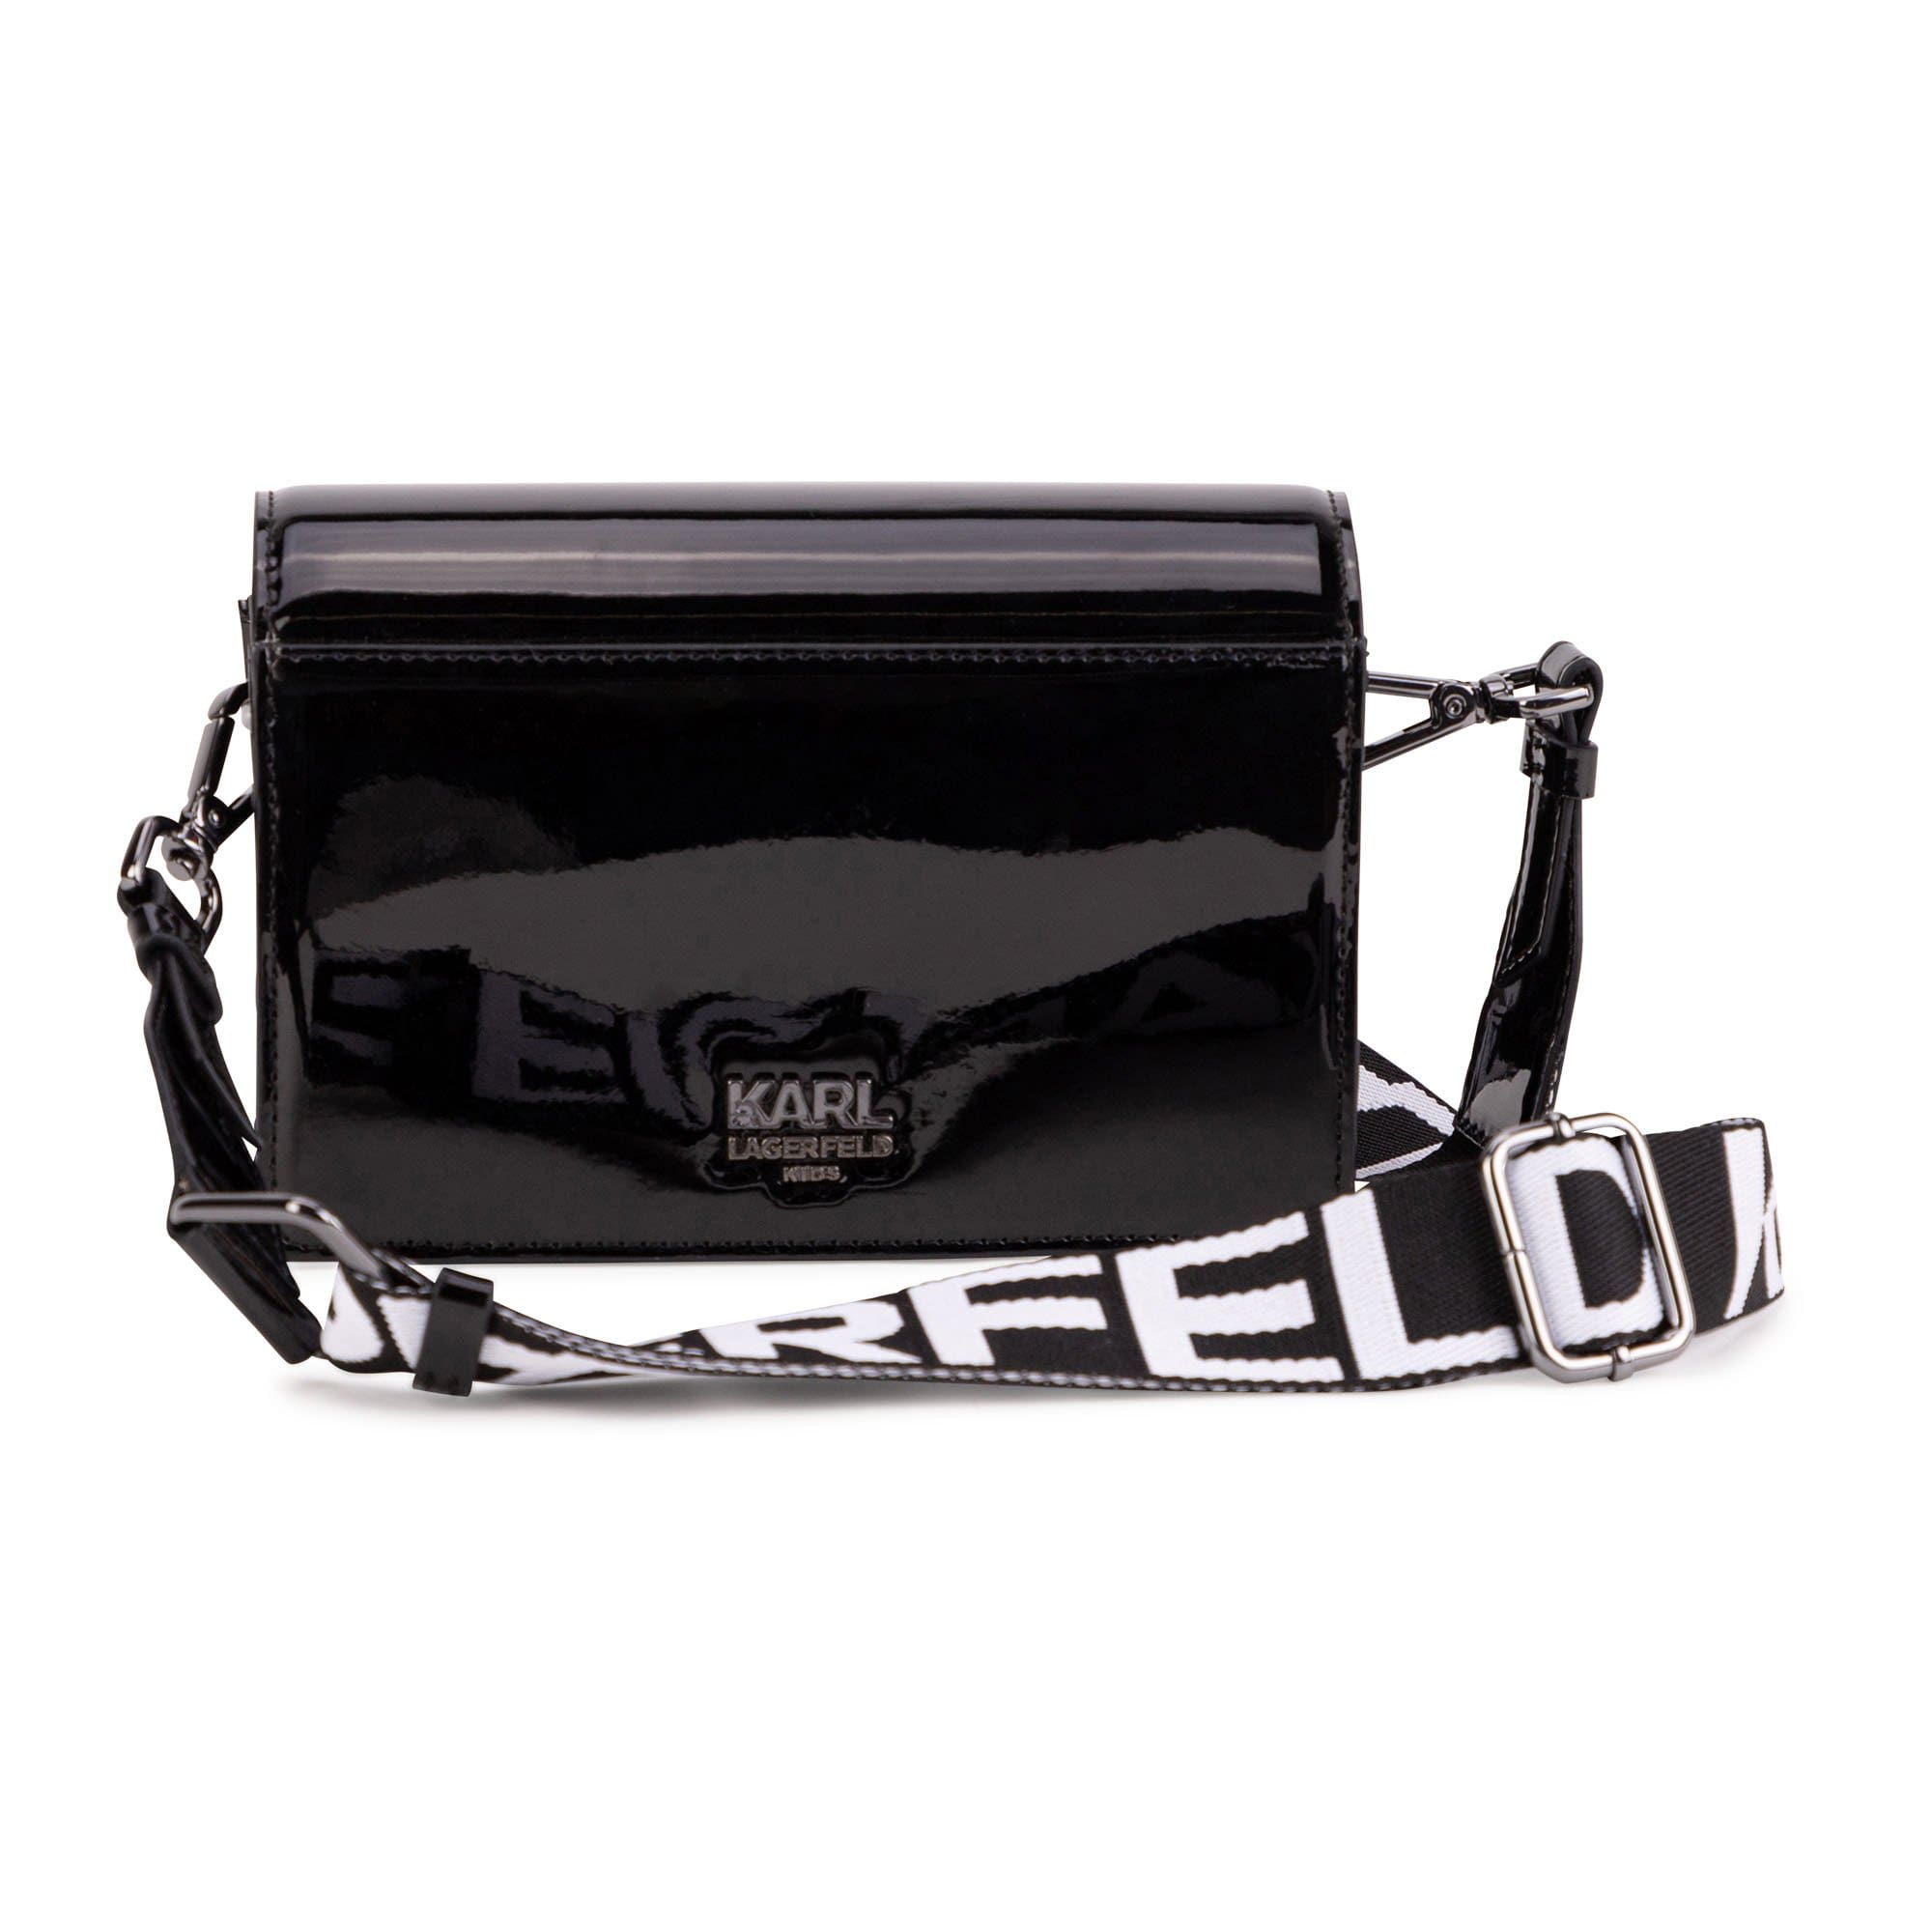 Karl Lagerfeld - Logo Bag - Black